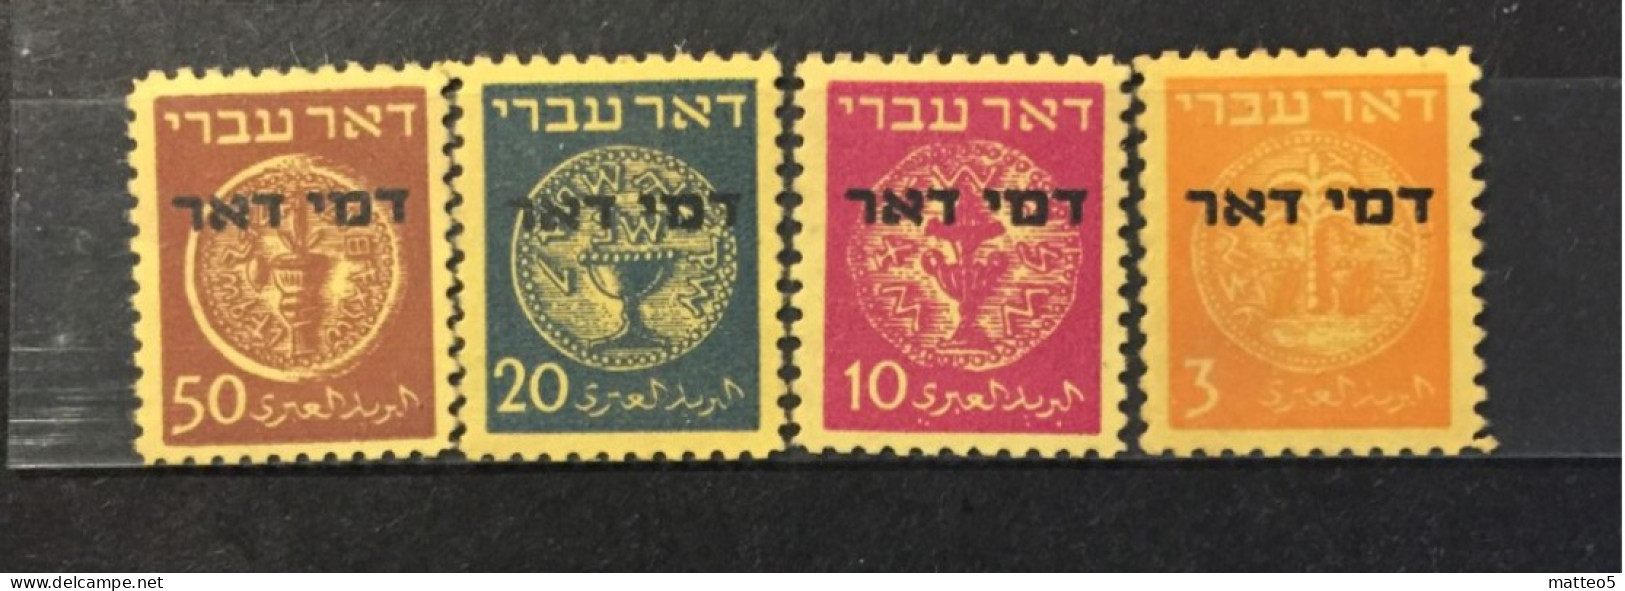 1948 - Israel - Coins Doar Ivri - Postage Due . No Tab - 4 Stamps Unused - Nuevos (sin Tab)